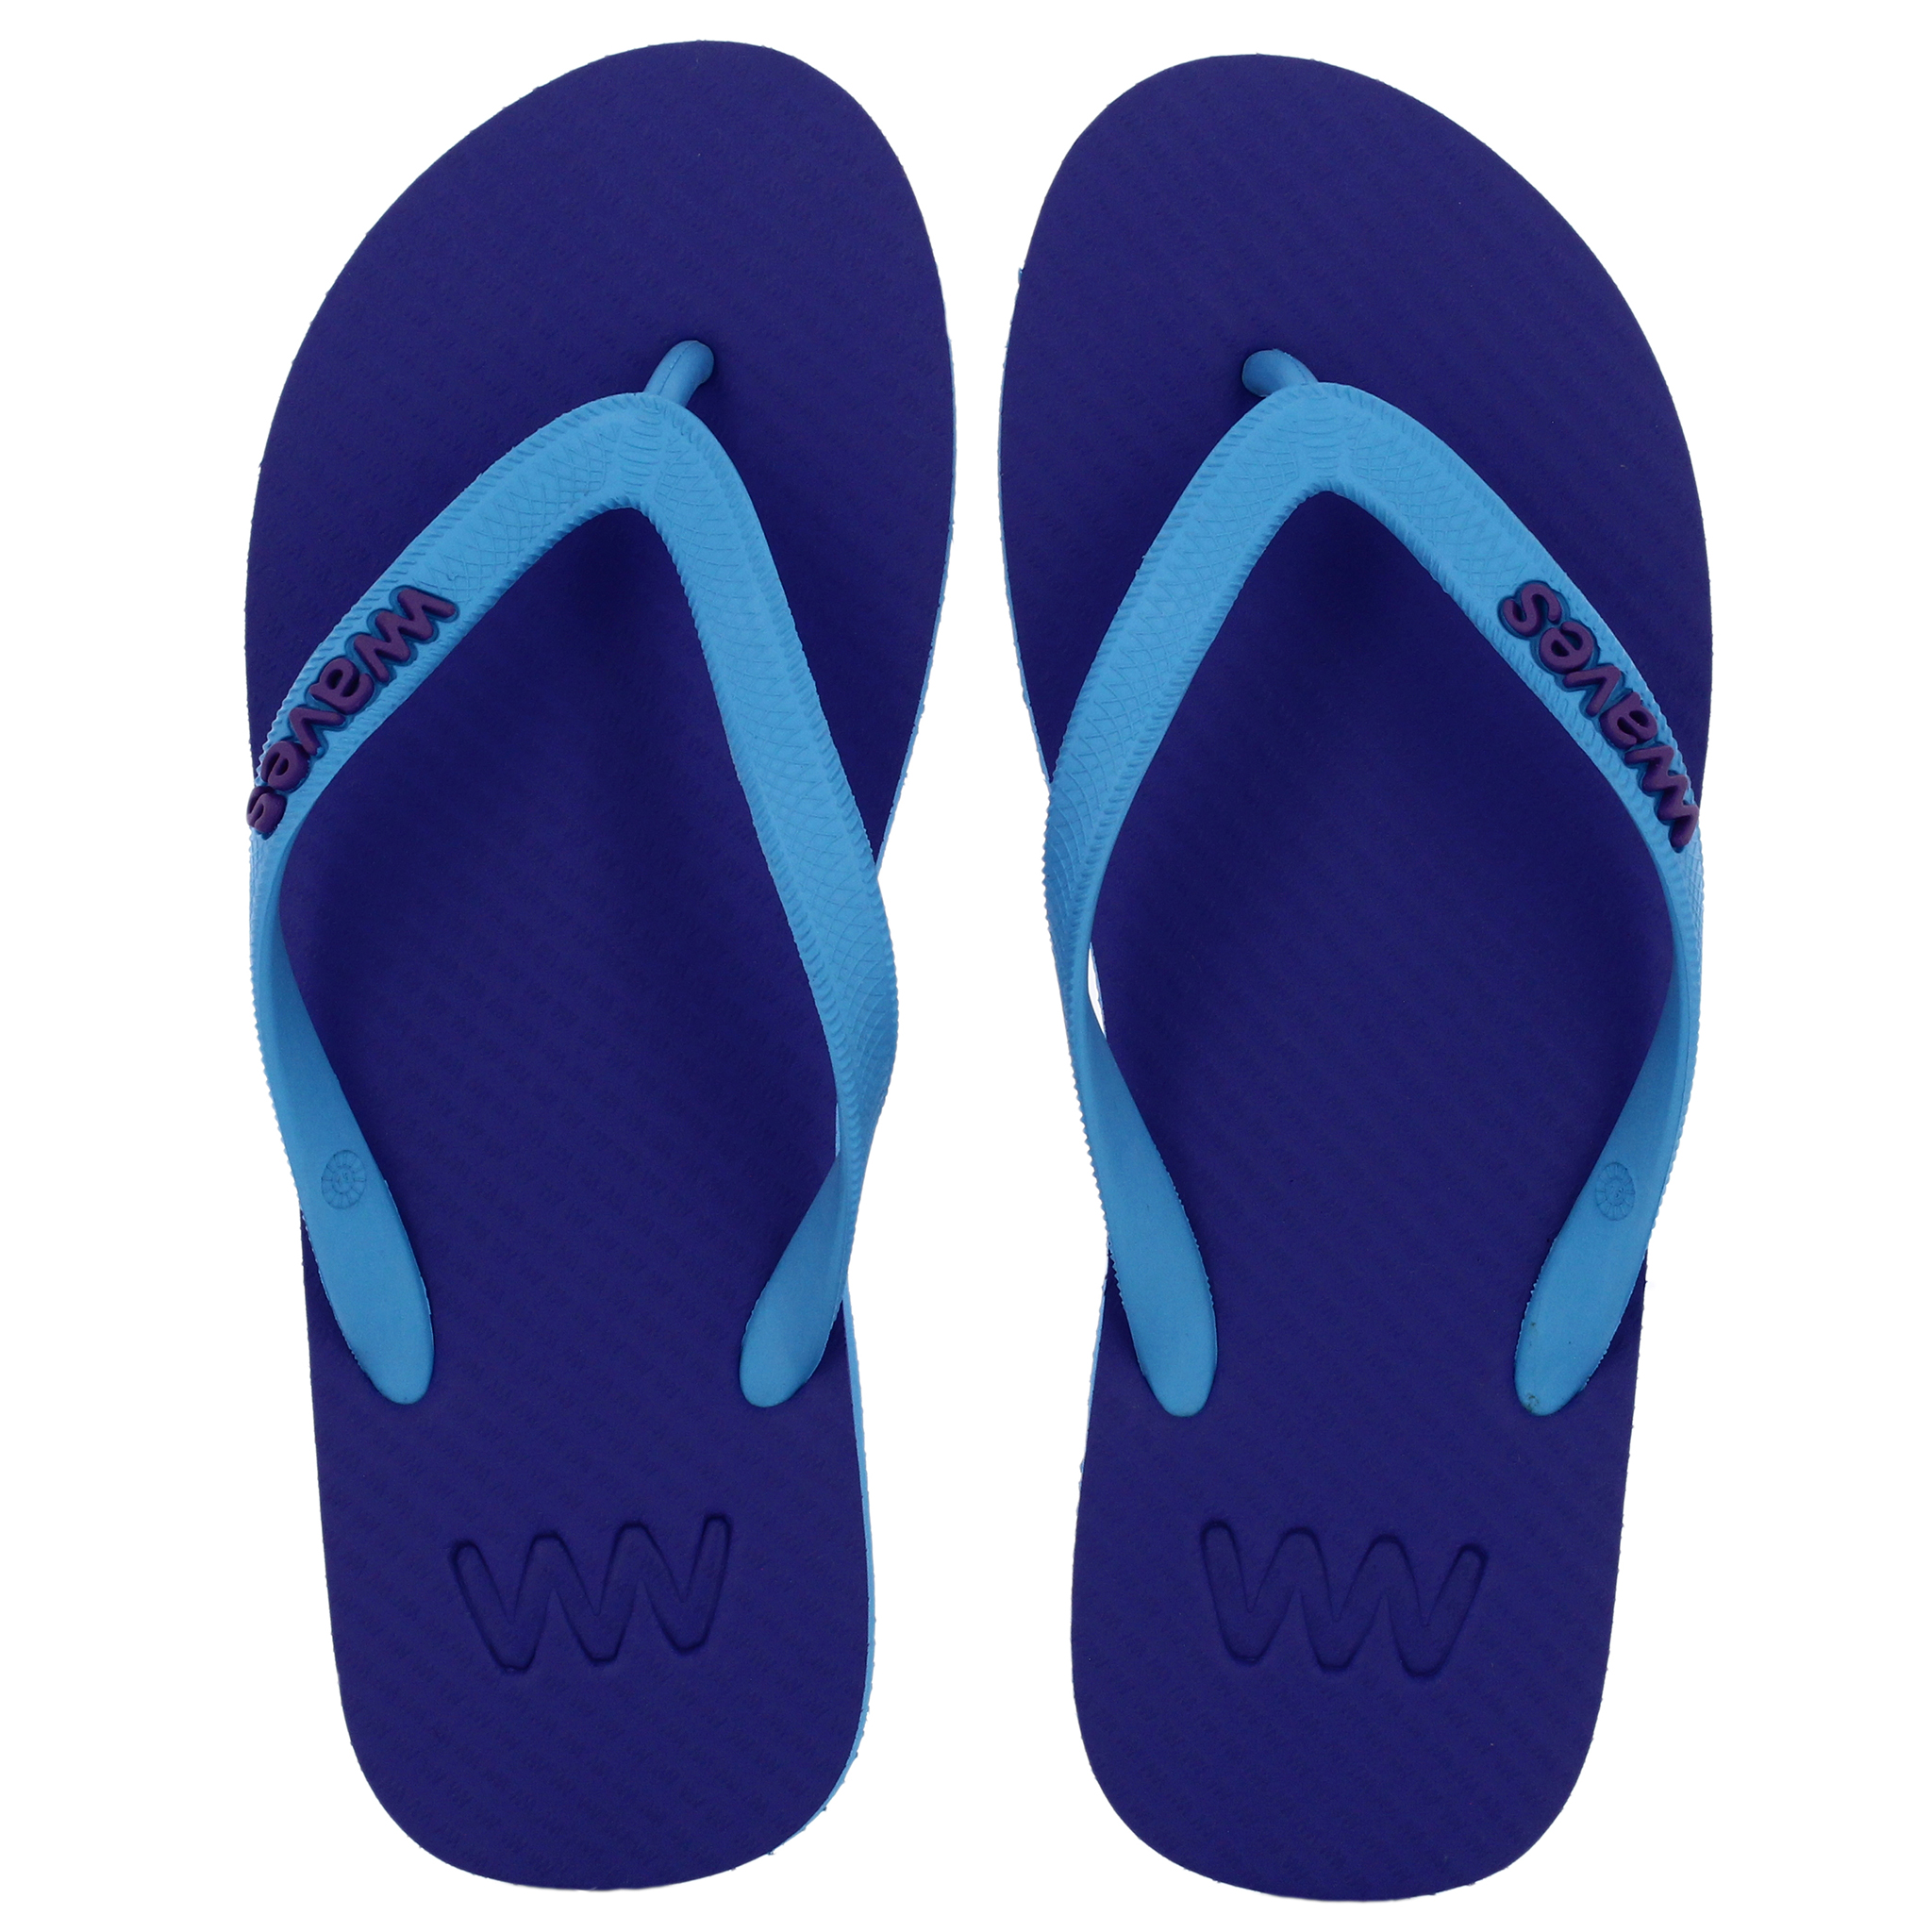 Blue and Purple Twofold Flip Flops, Men's | eBay